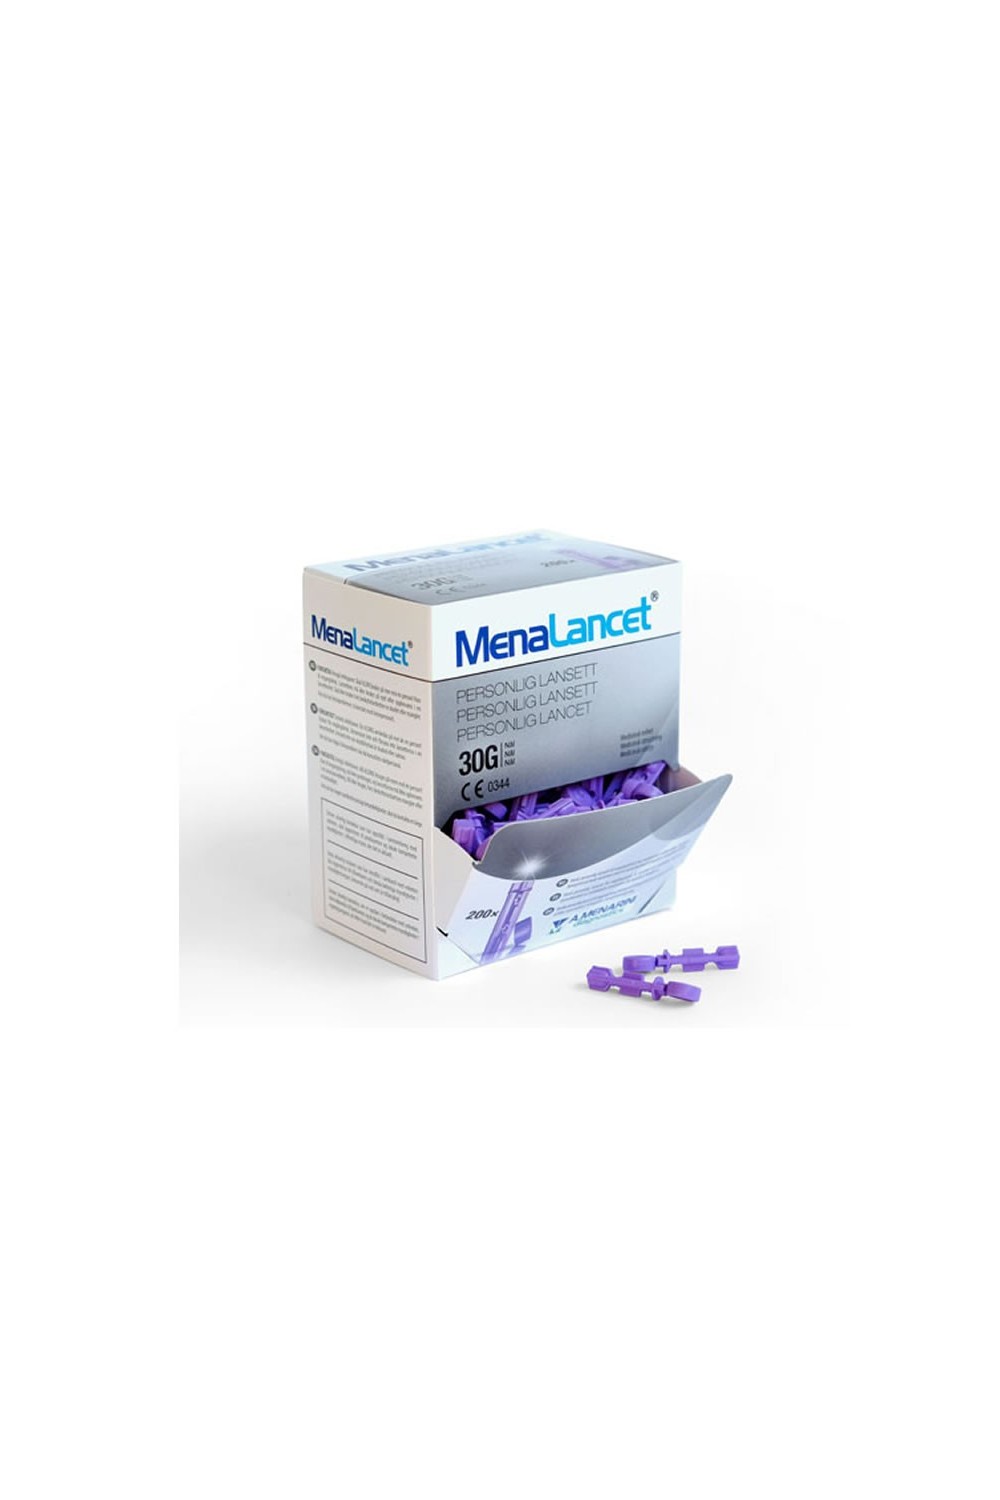 MENARINI - Menalancet 30g 200 Lancets